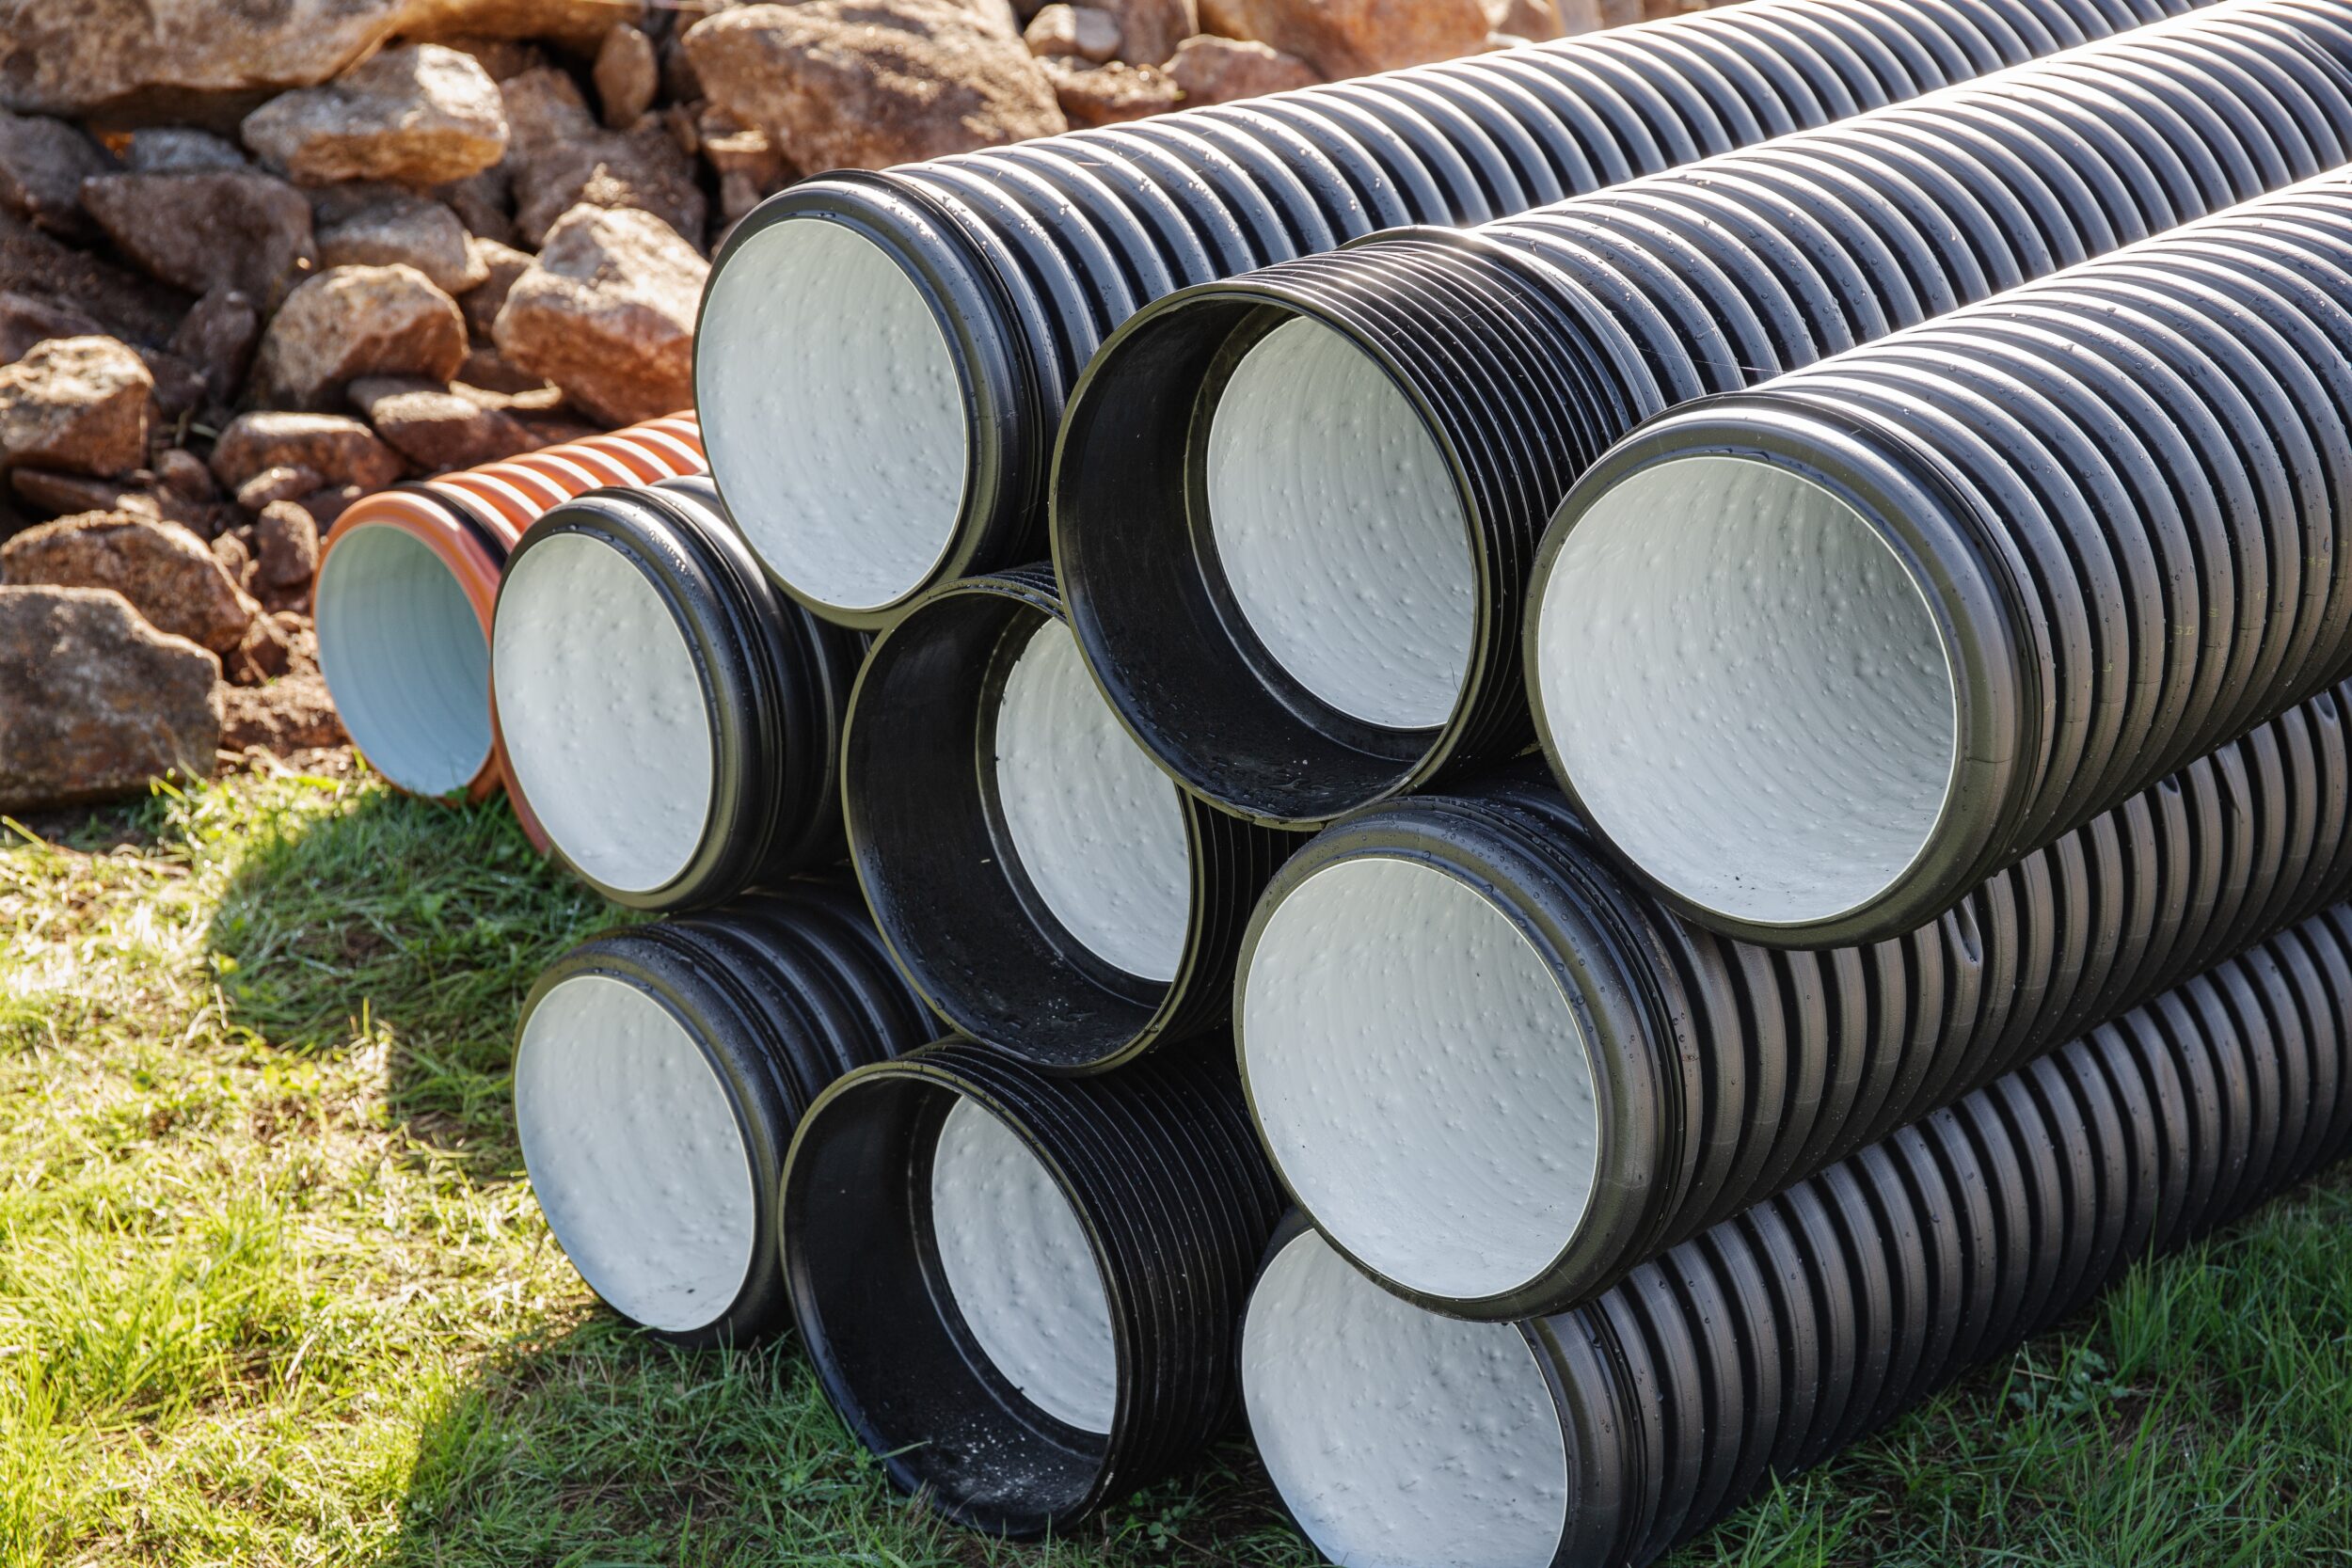 Pile of Polyethylene drainage pipes on outdoors